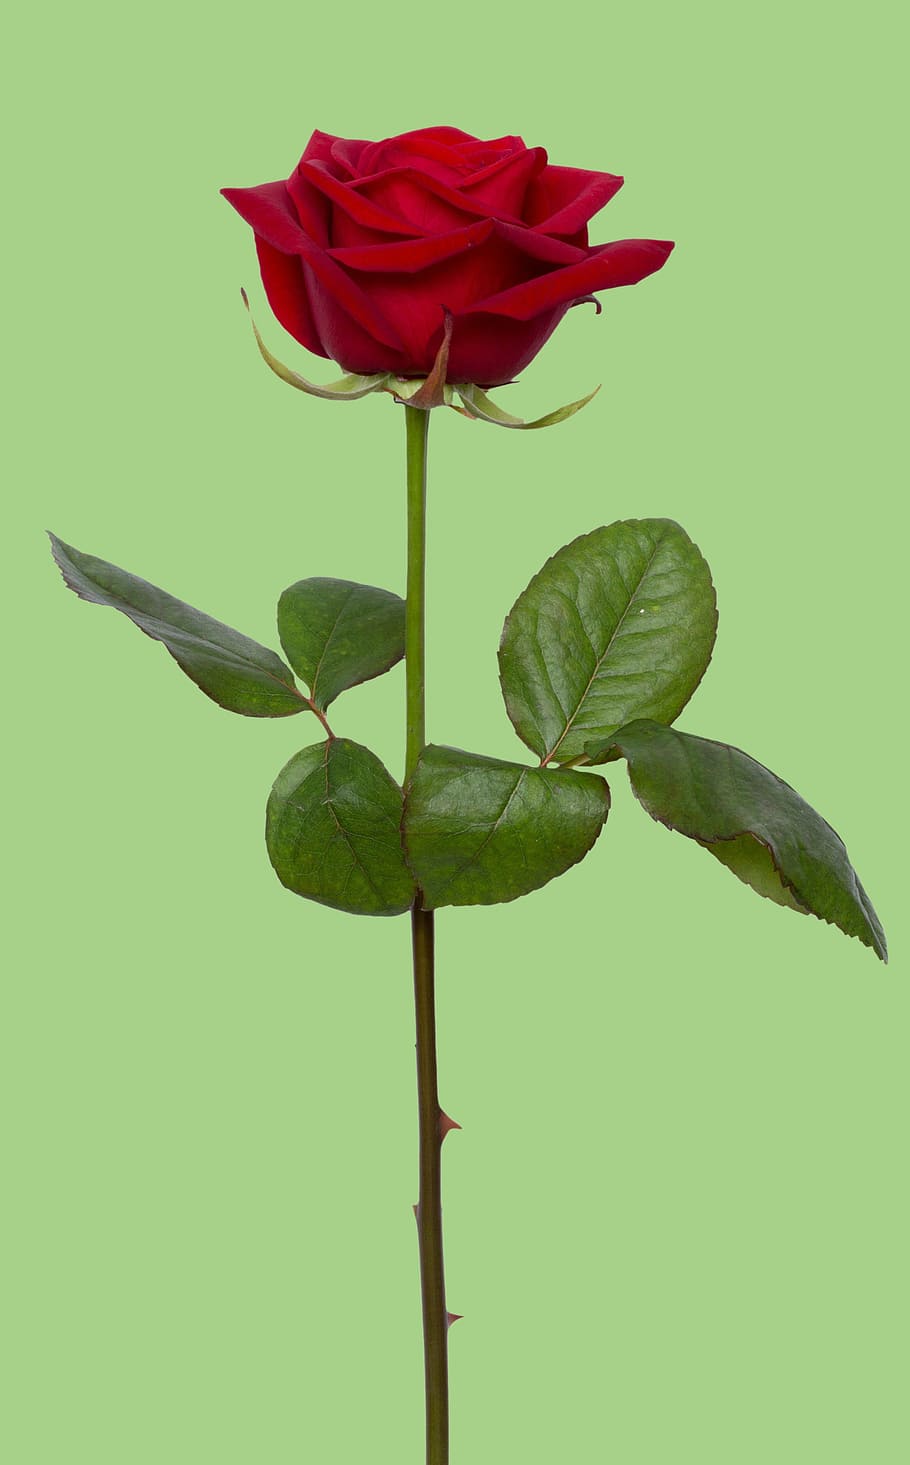 single, stem, red, rose, red rose, flower, love, romance, gift, floral